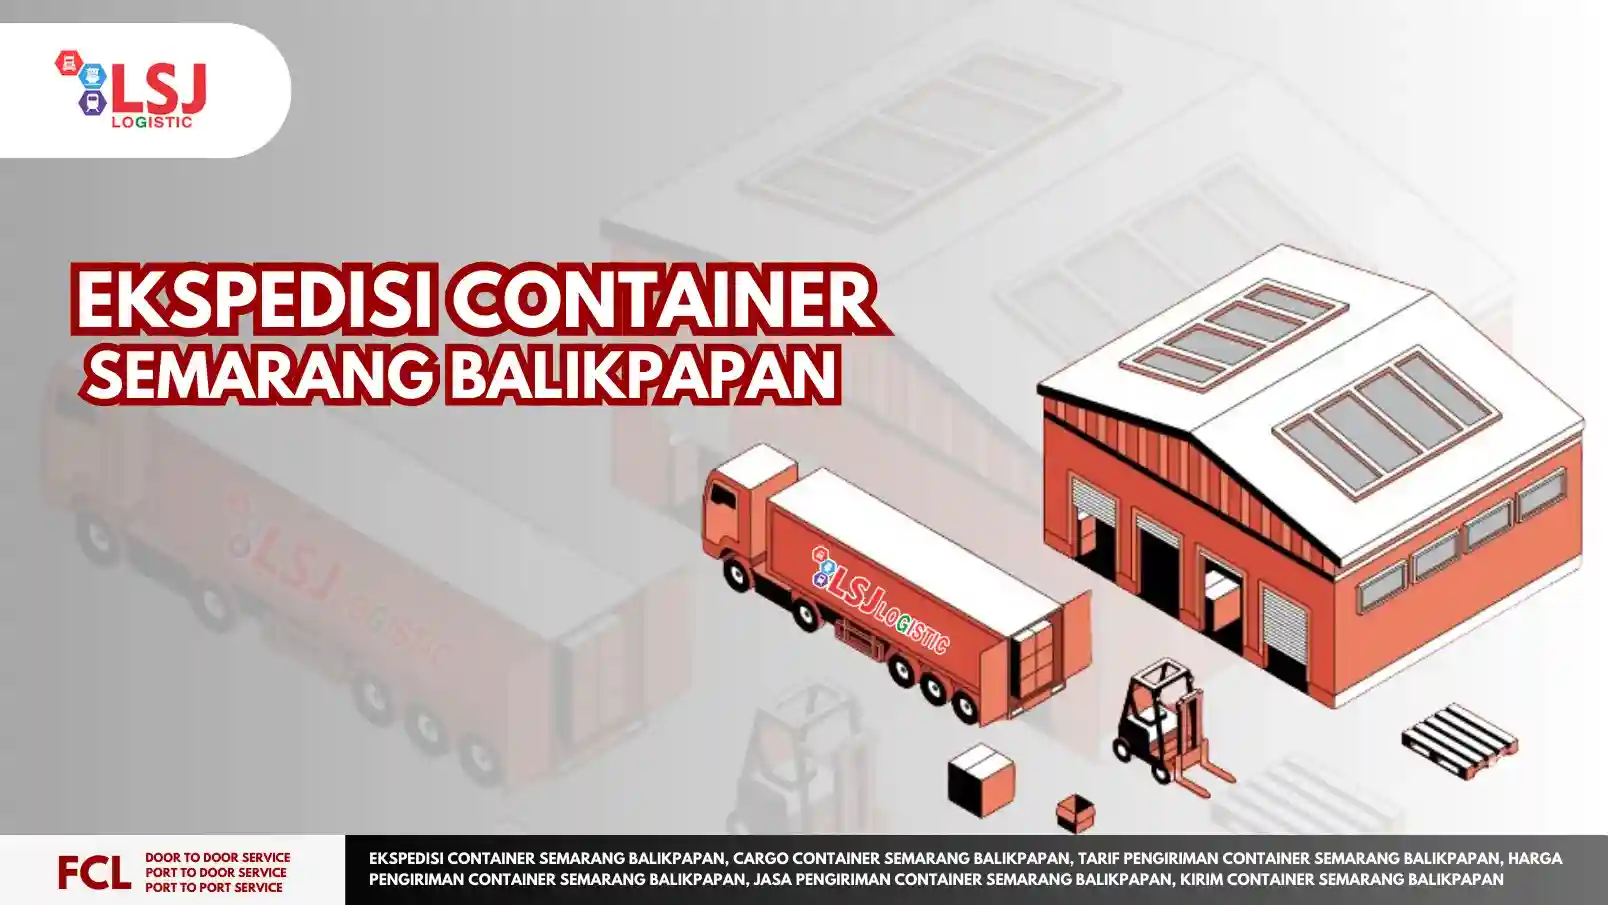 Ekspedisi Container Semarang Balikpapan